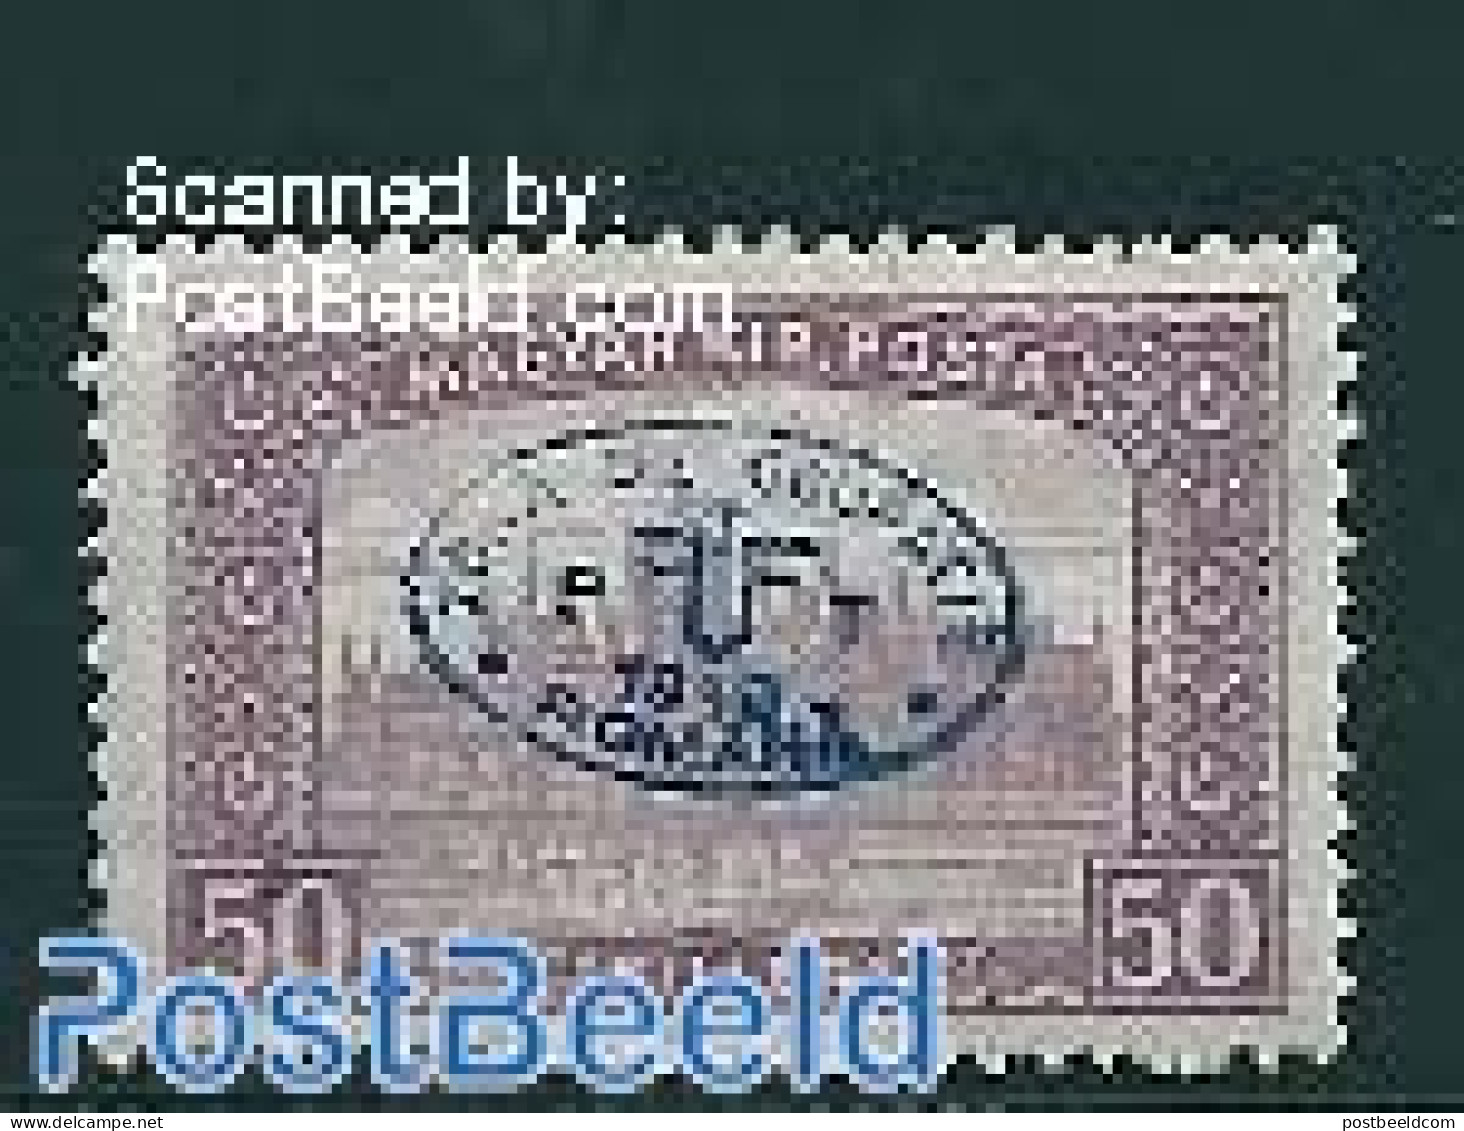 Hungary 1919 Debrecen, 50f, Stamp Out Of Set, Unused (hinged) - Unused Stamps